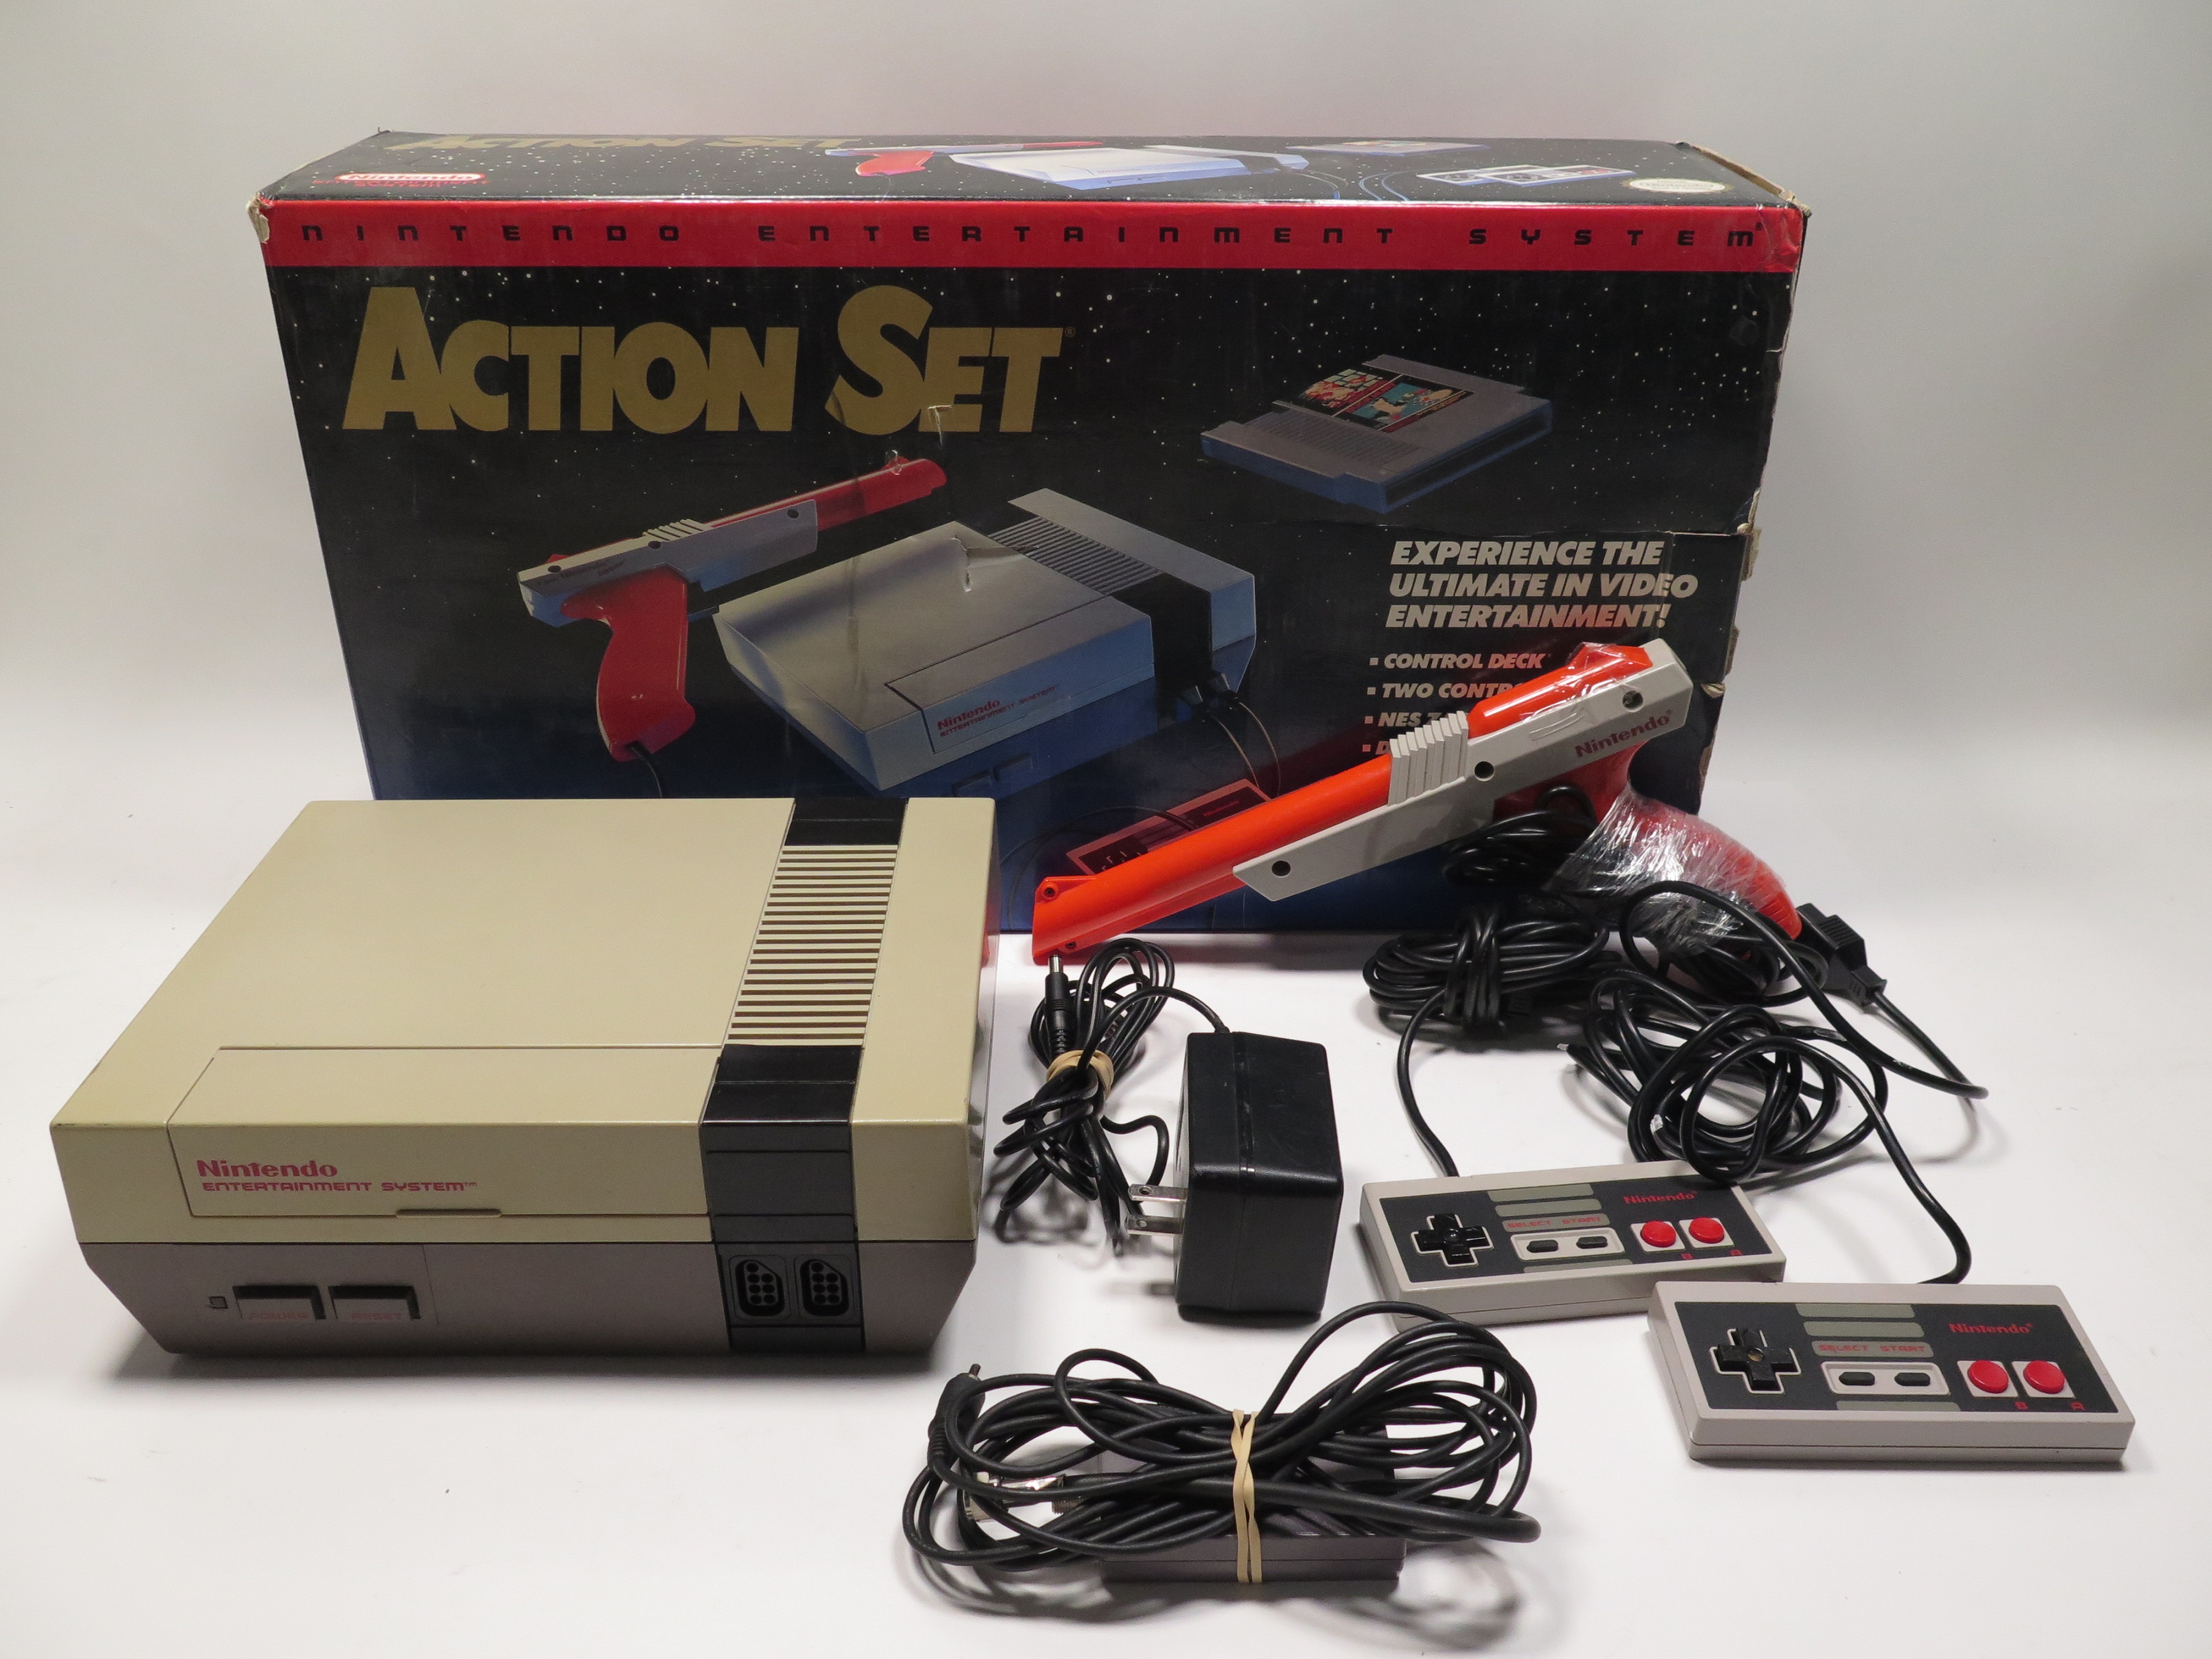 NES-001 Action Set Video Game Bundle 2212